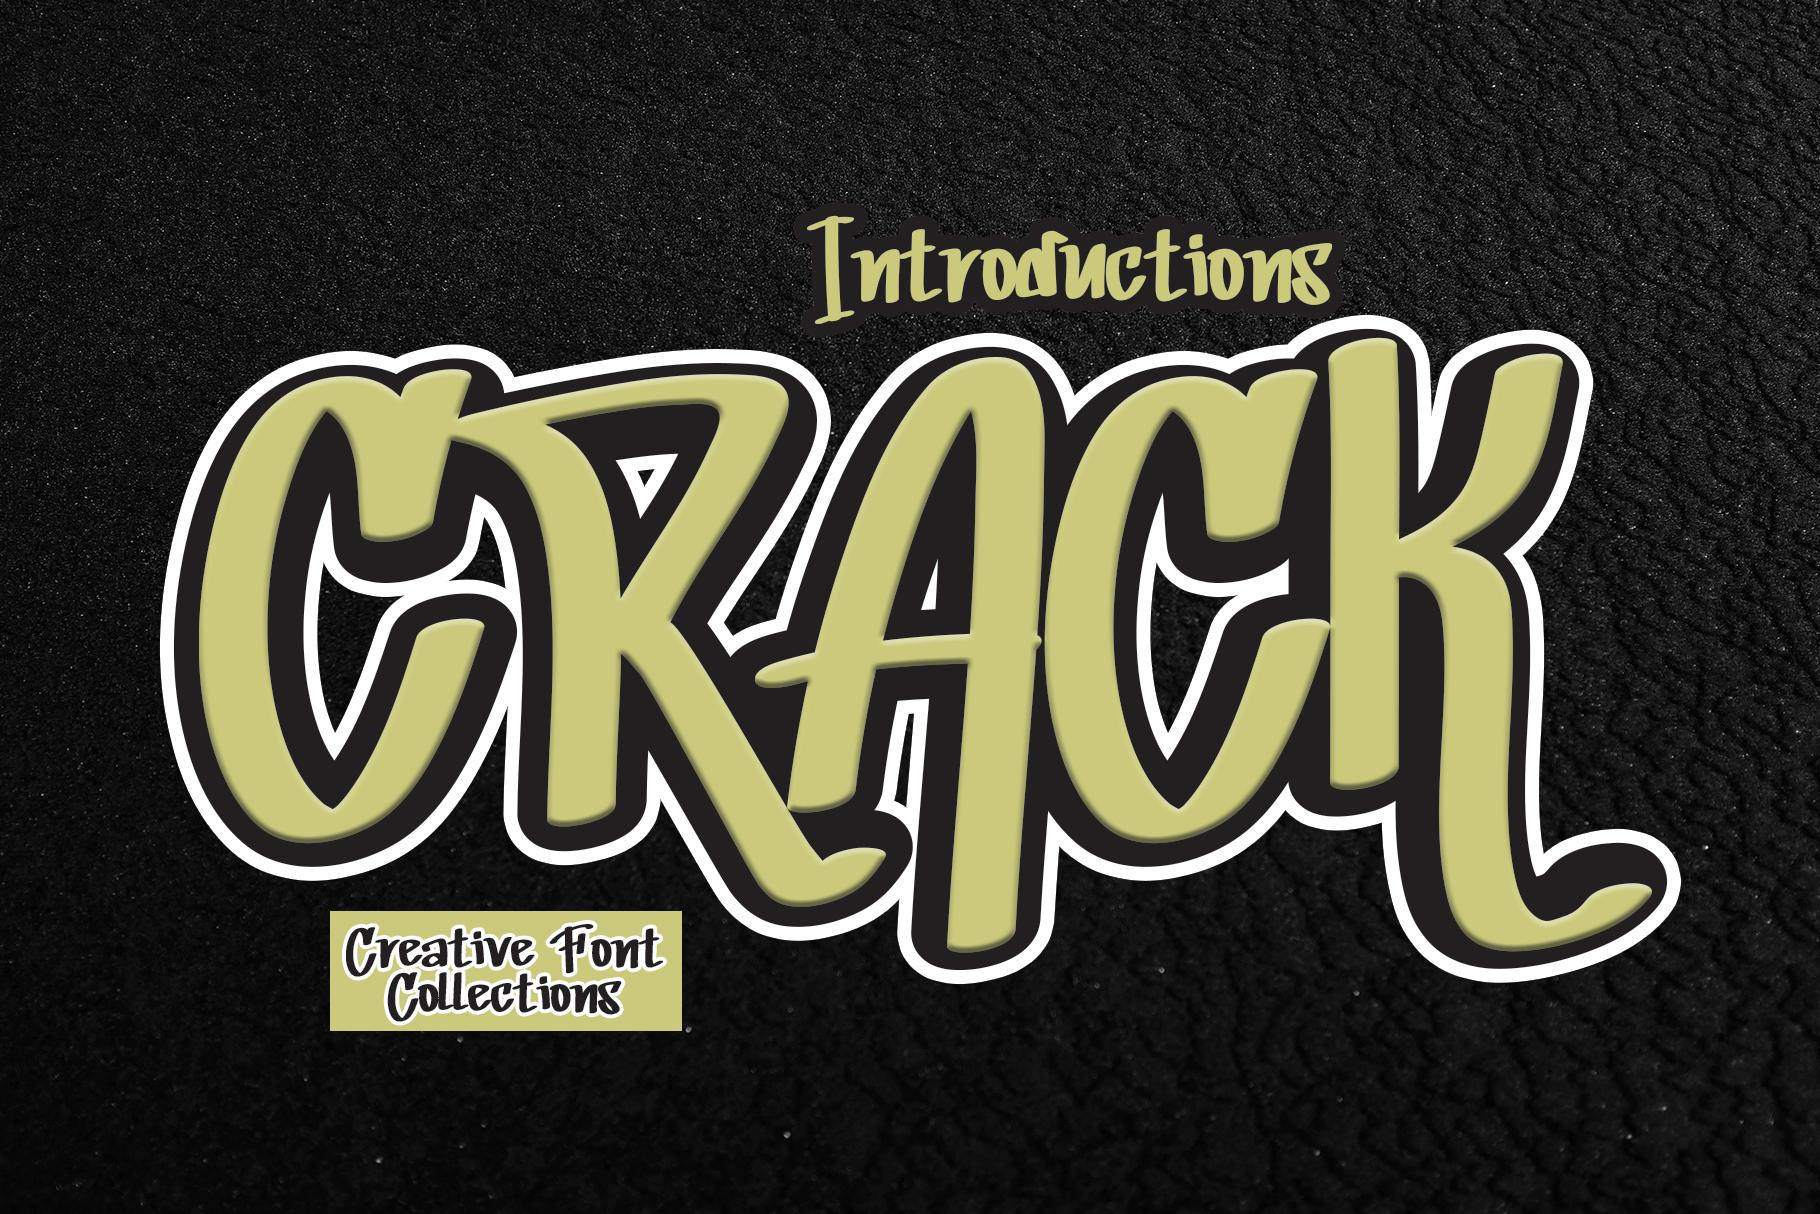 Crack Font